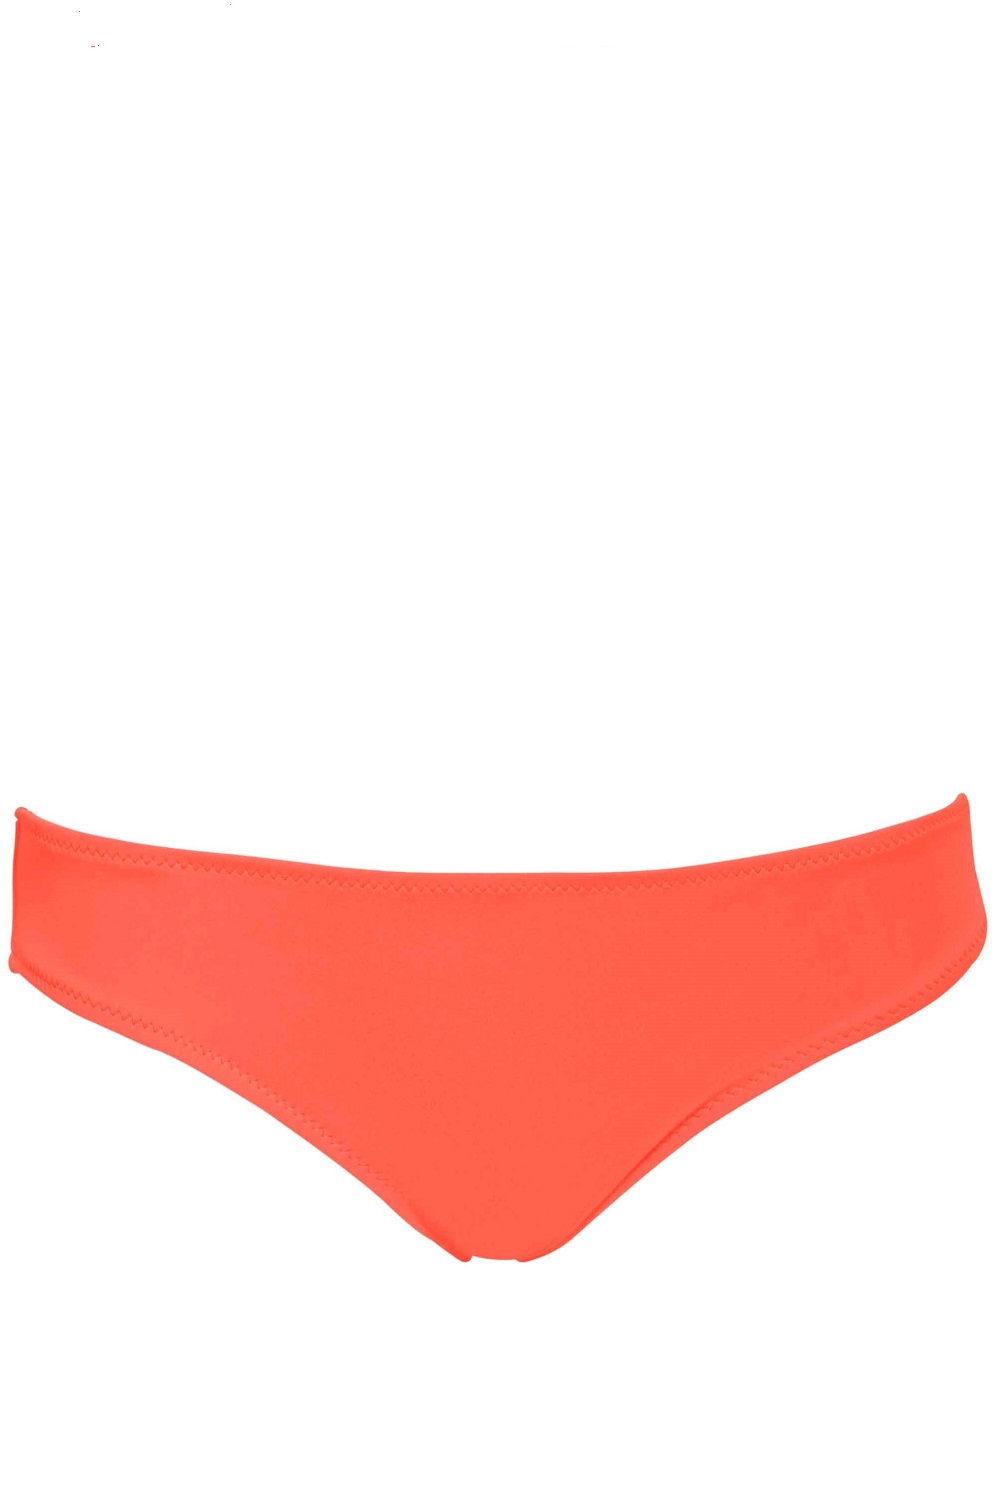 Phax Neon Oranje Klassiek Bikini Broekje